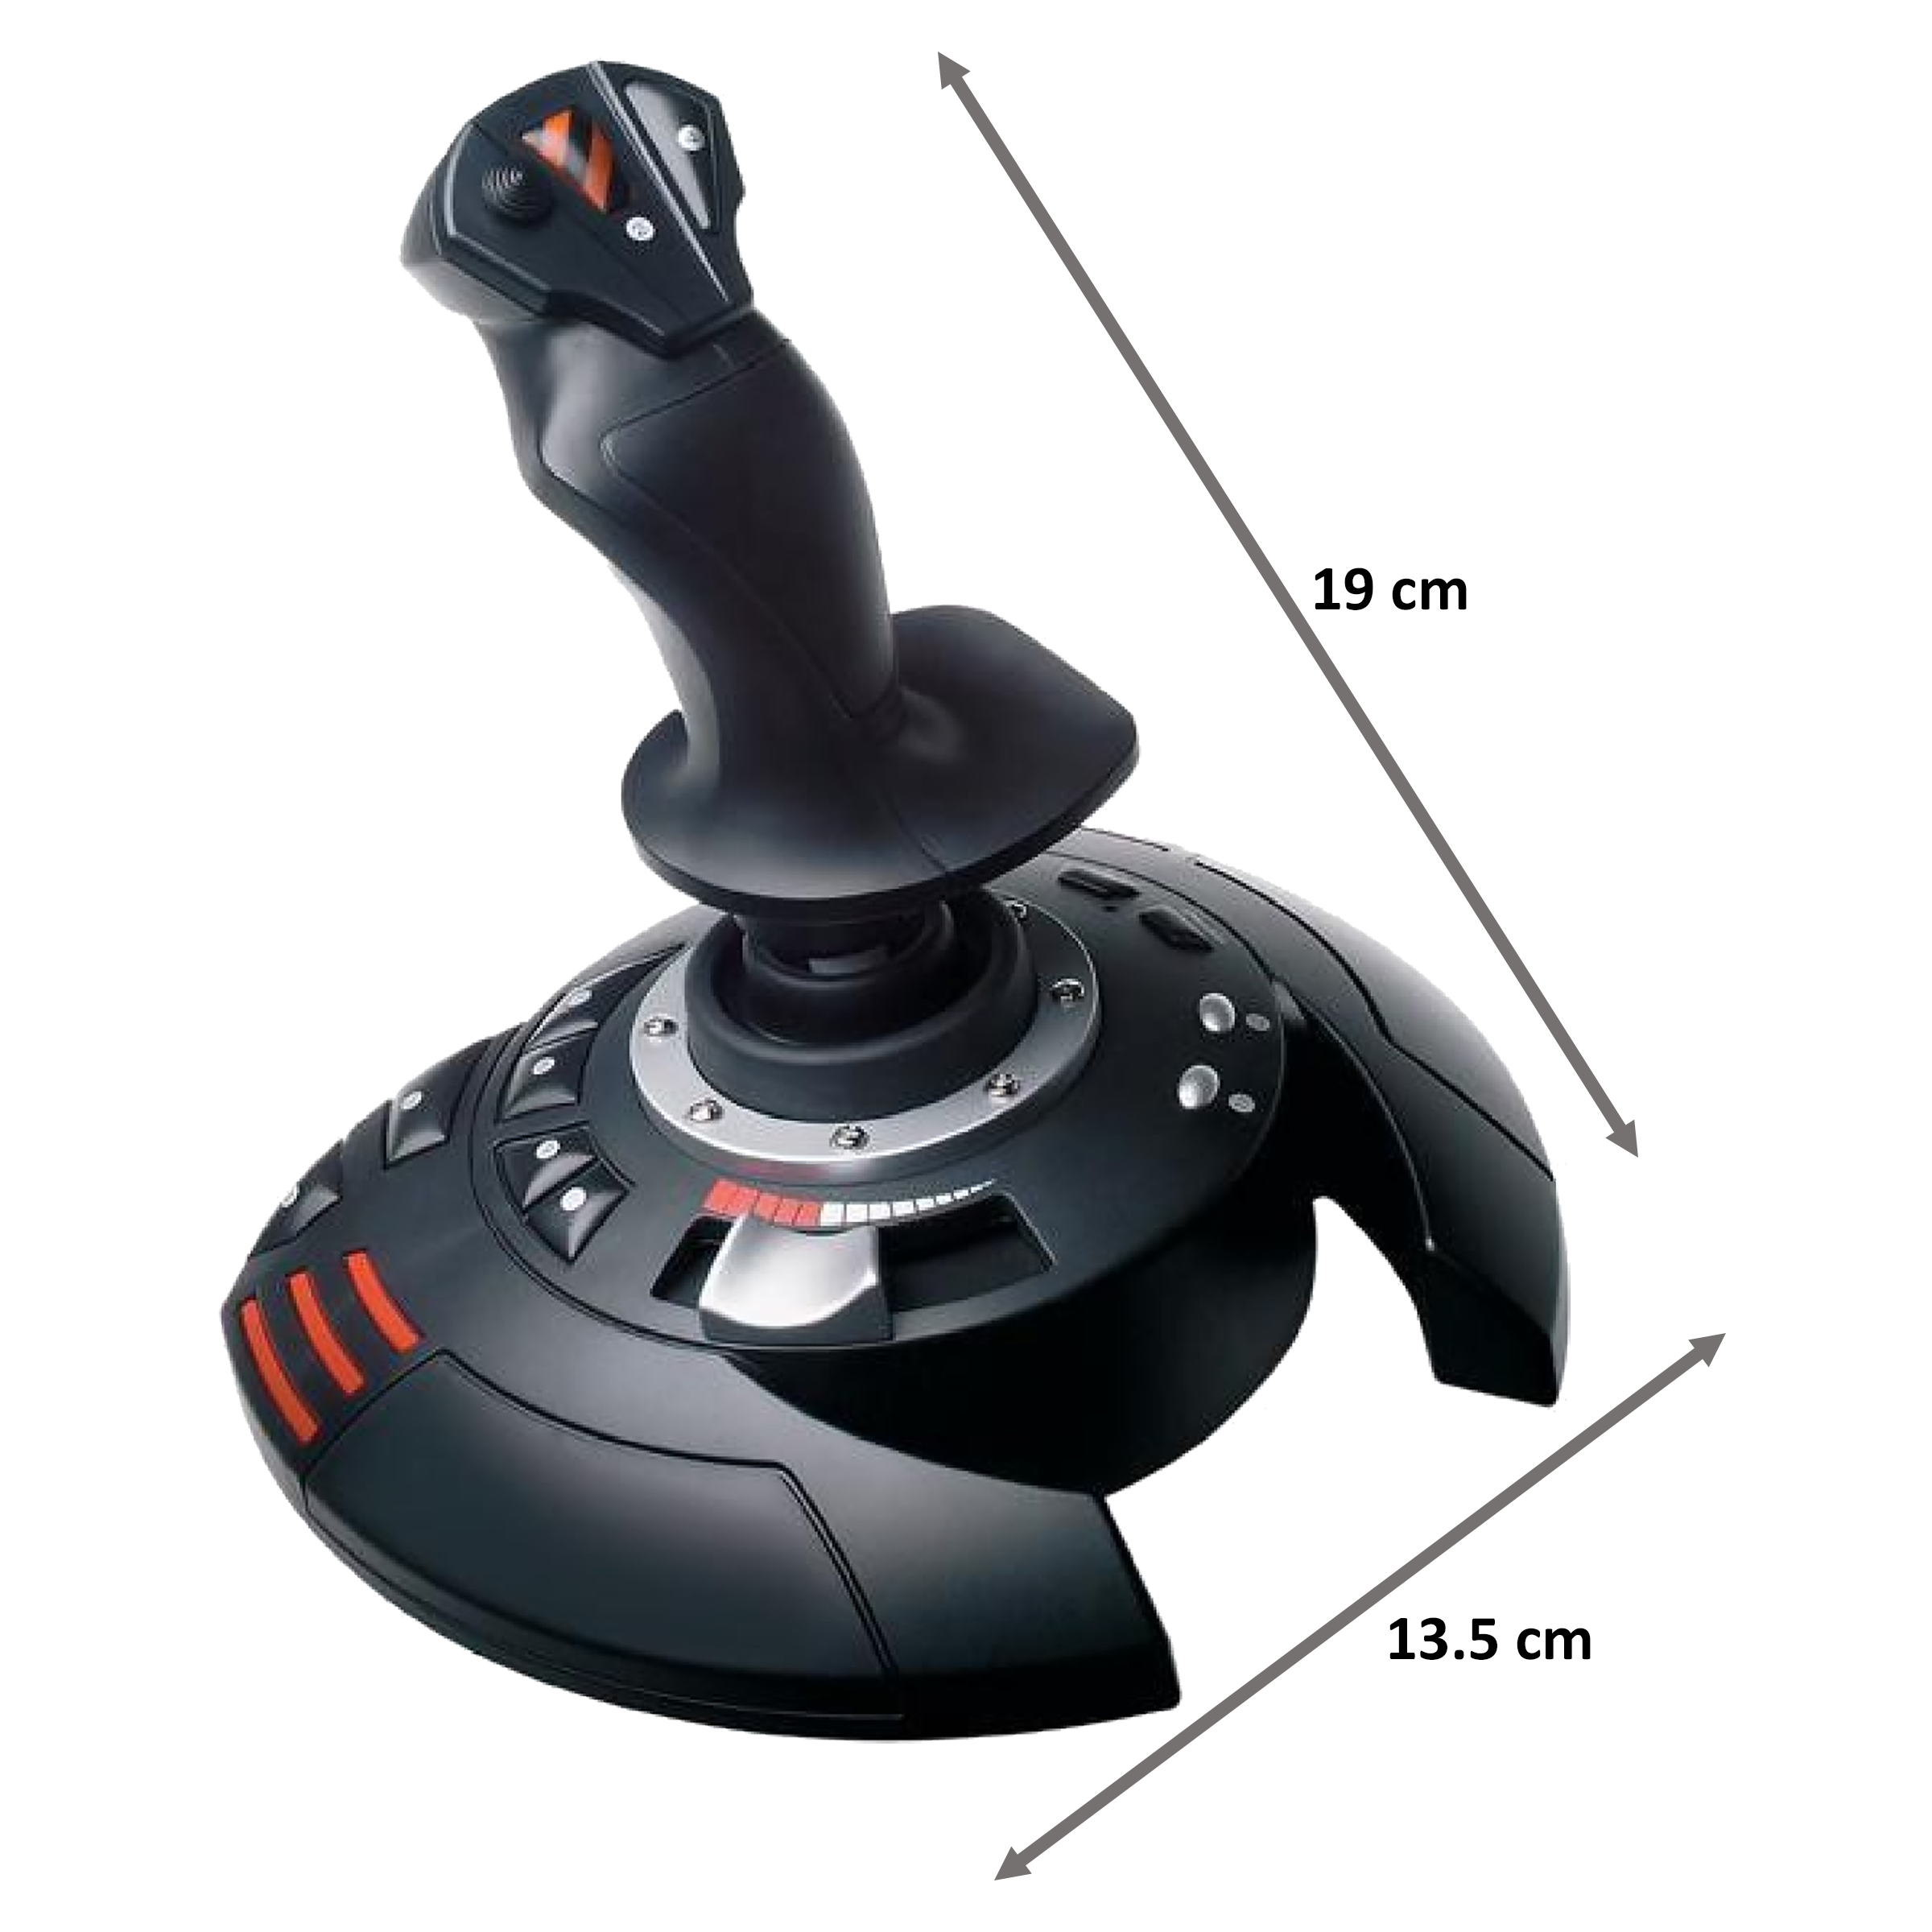 Thrustmaster T Flight Hotas X PC/PS3 Joystick For PS3 / PC (Dual-System Aerodynamic Control, Black)_2